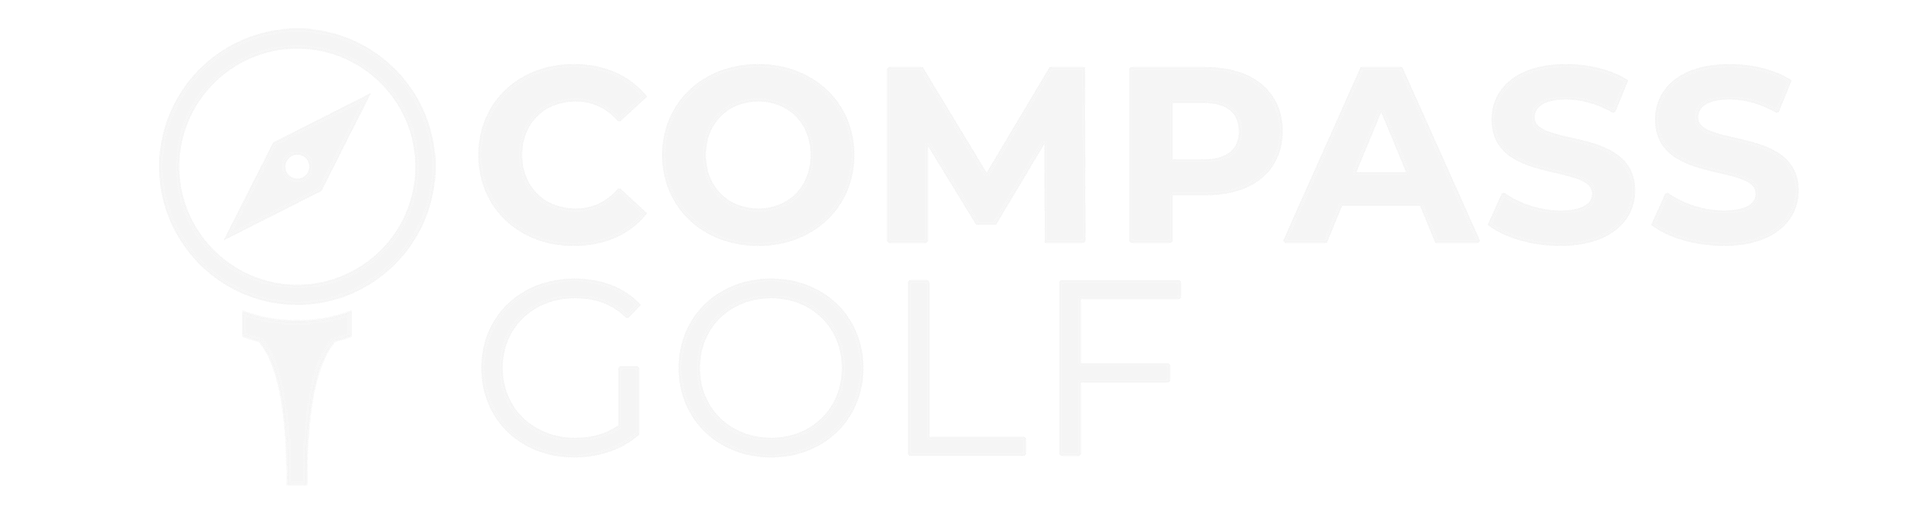 Compass Golf White Logo